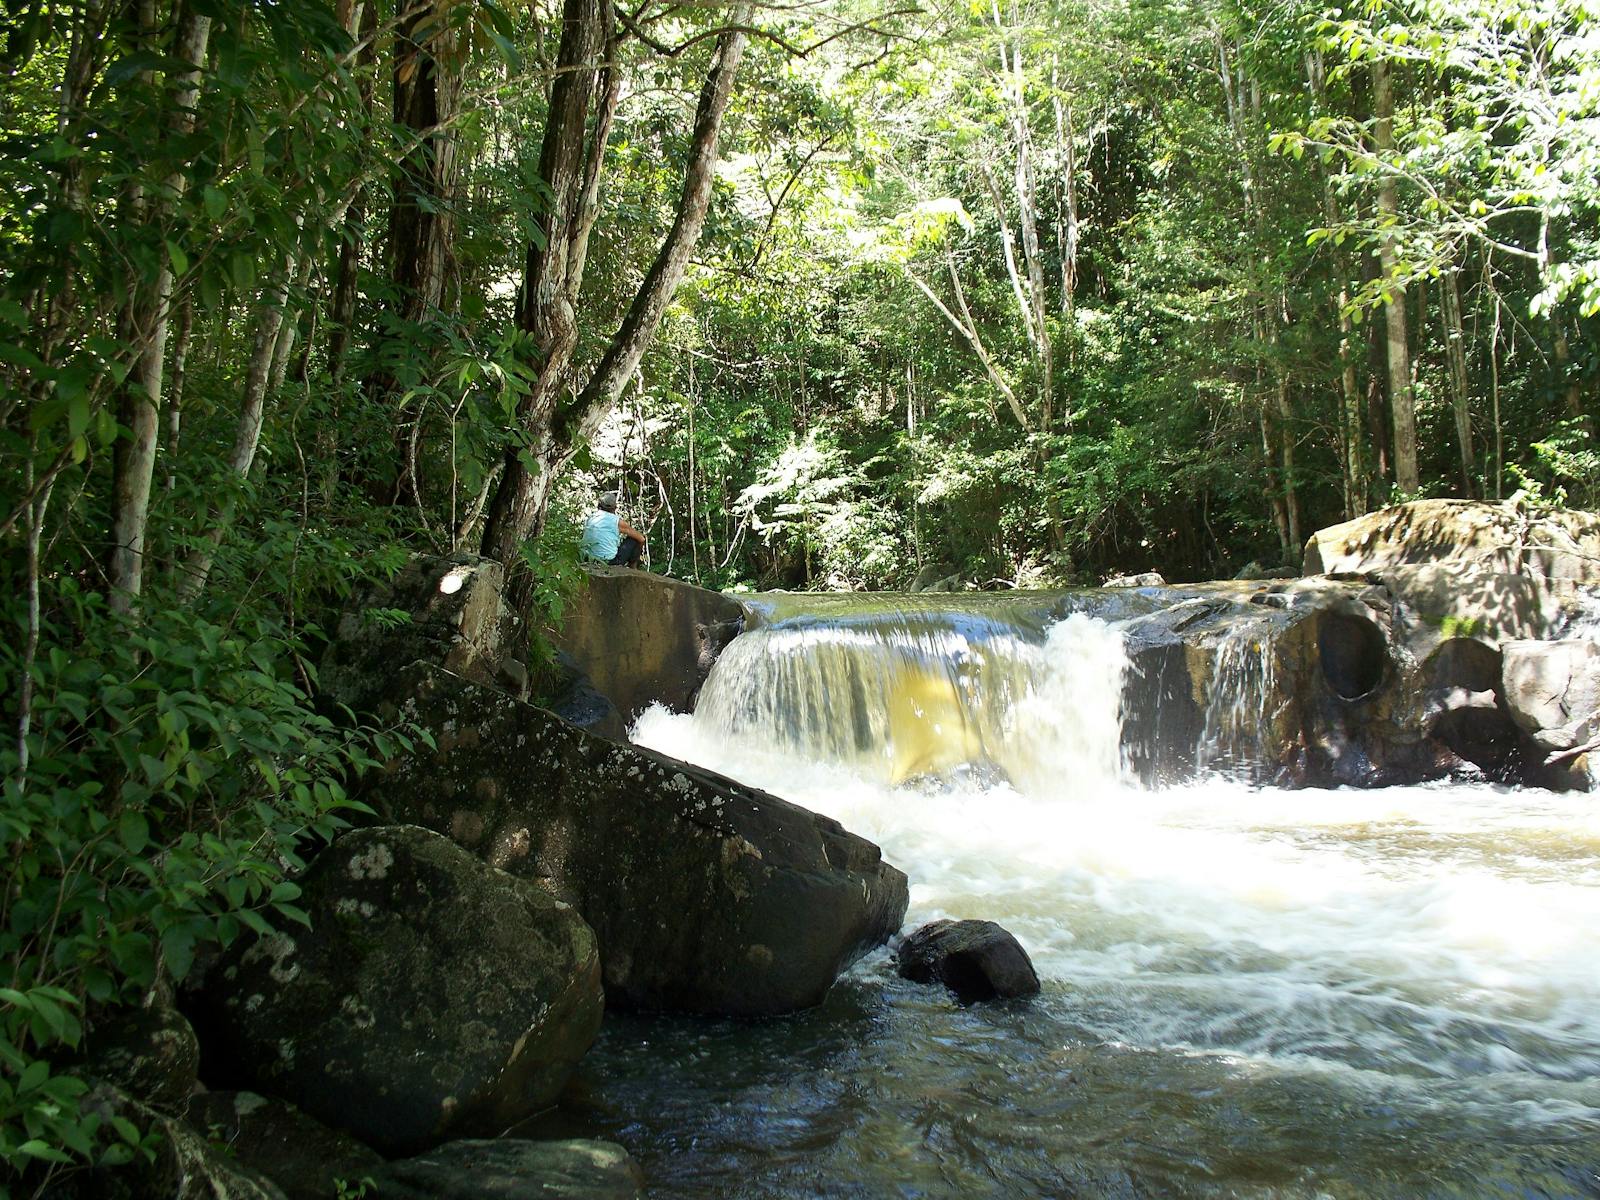 Guianan Lowland Moist Forests